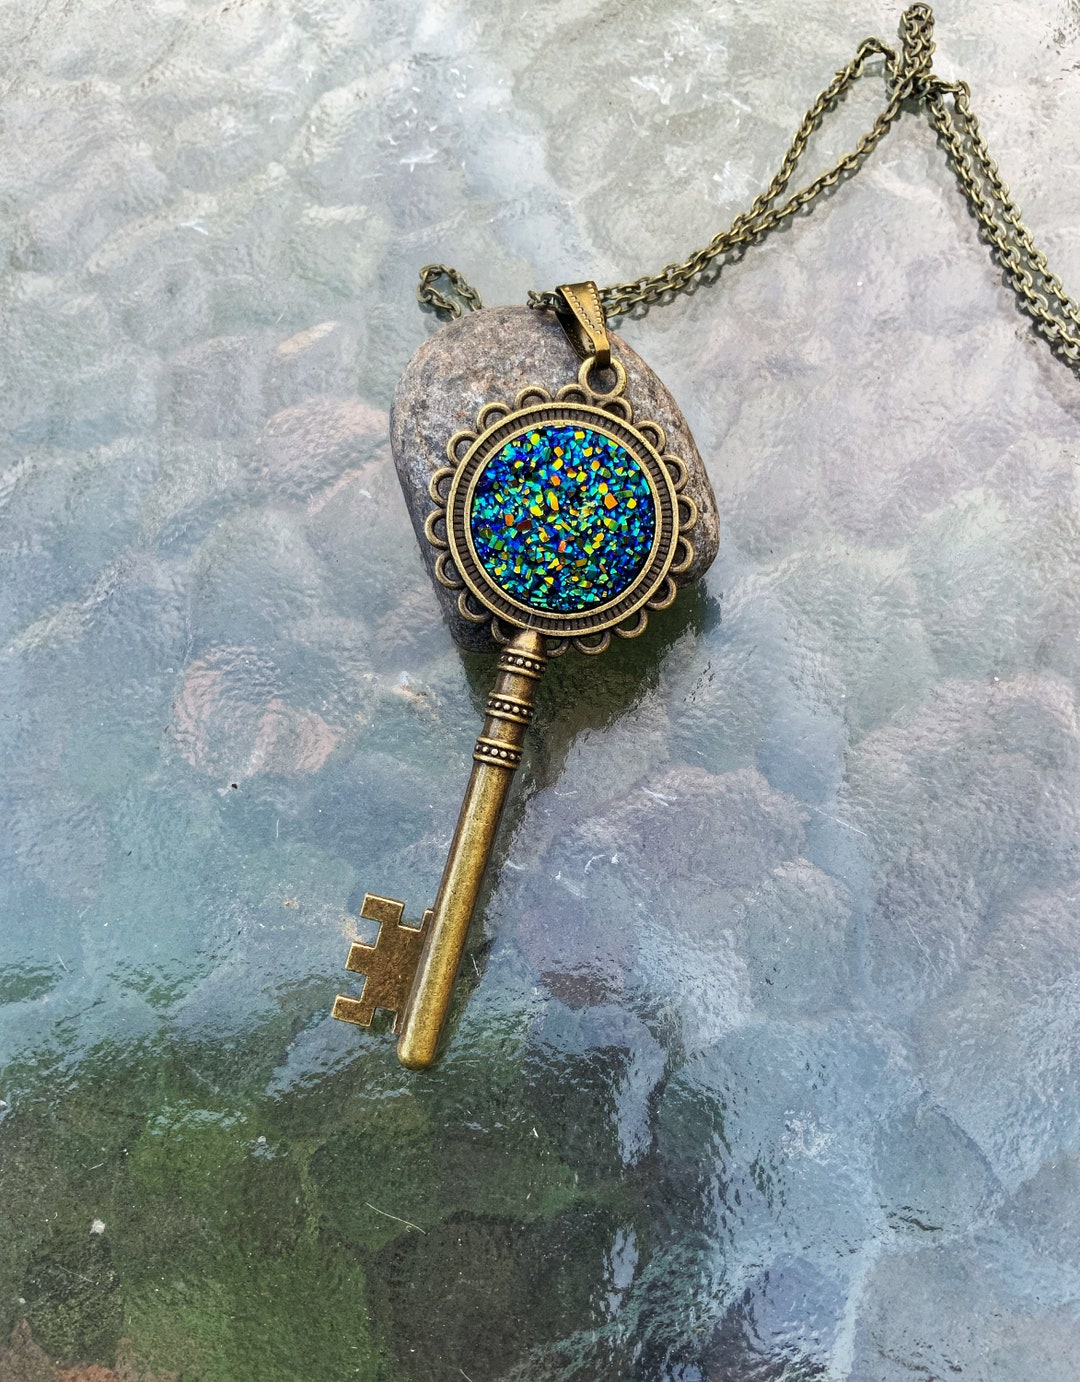 Skeleton Key necklace Antique Key necklace Bronze Vintage Inspired Antique  style Key christmas gift for her Key necklace antique bronze